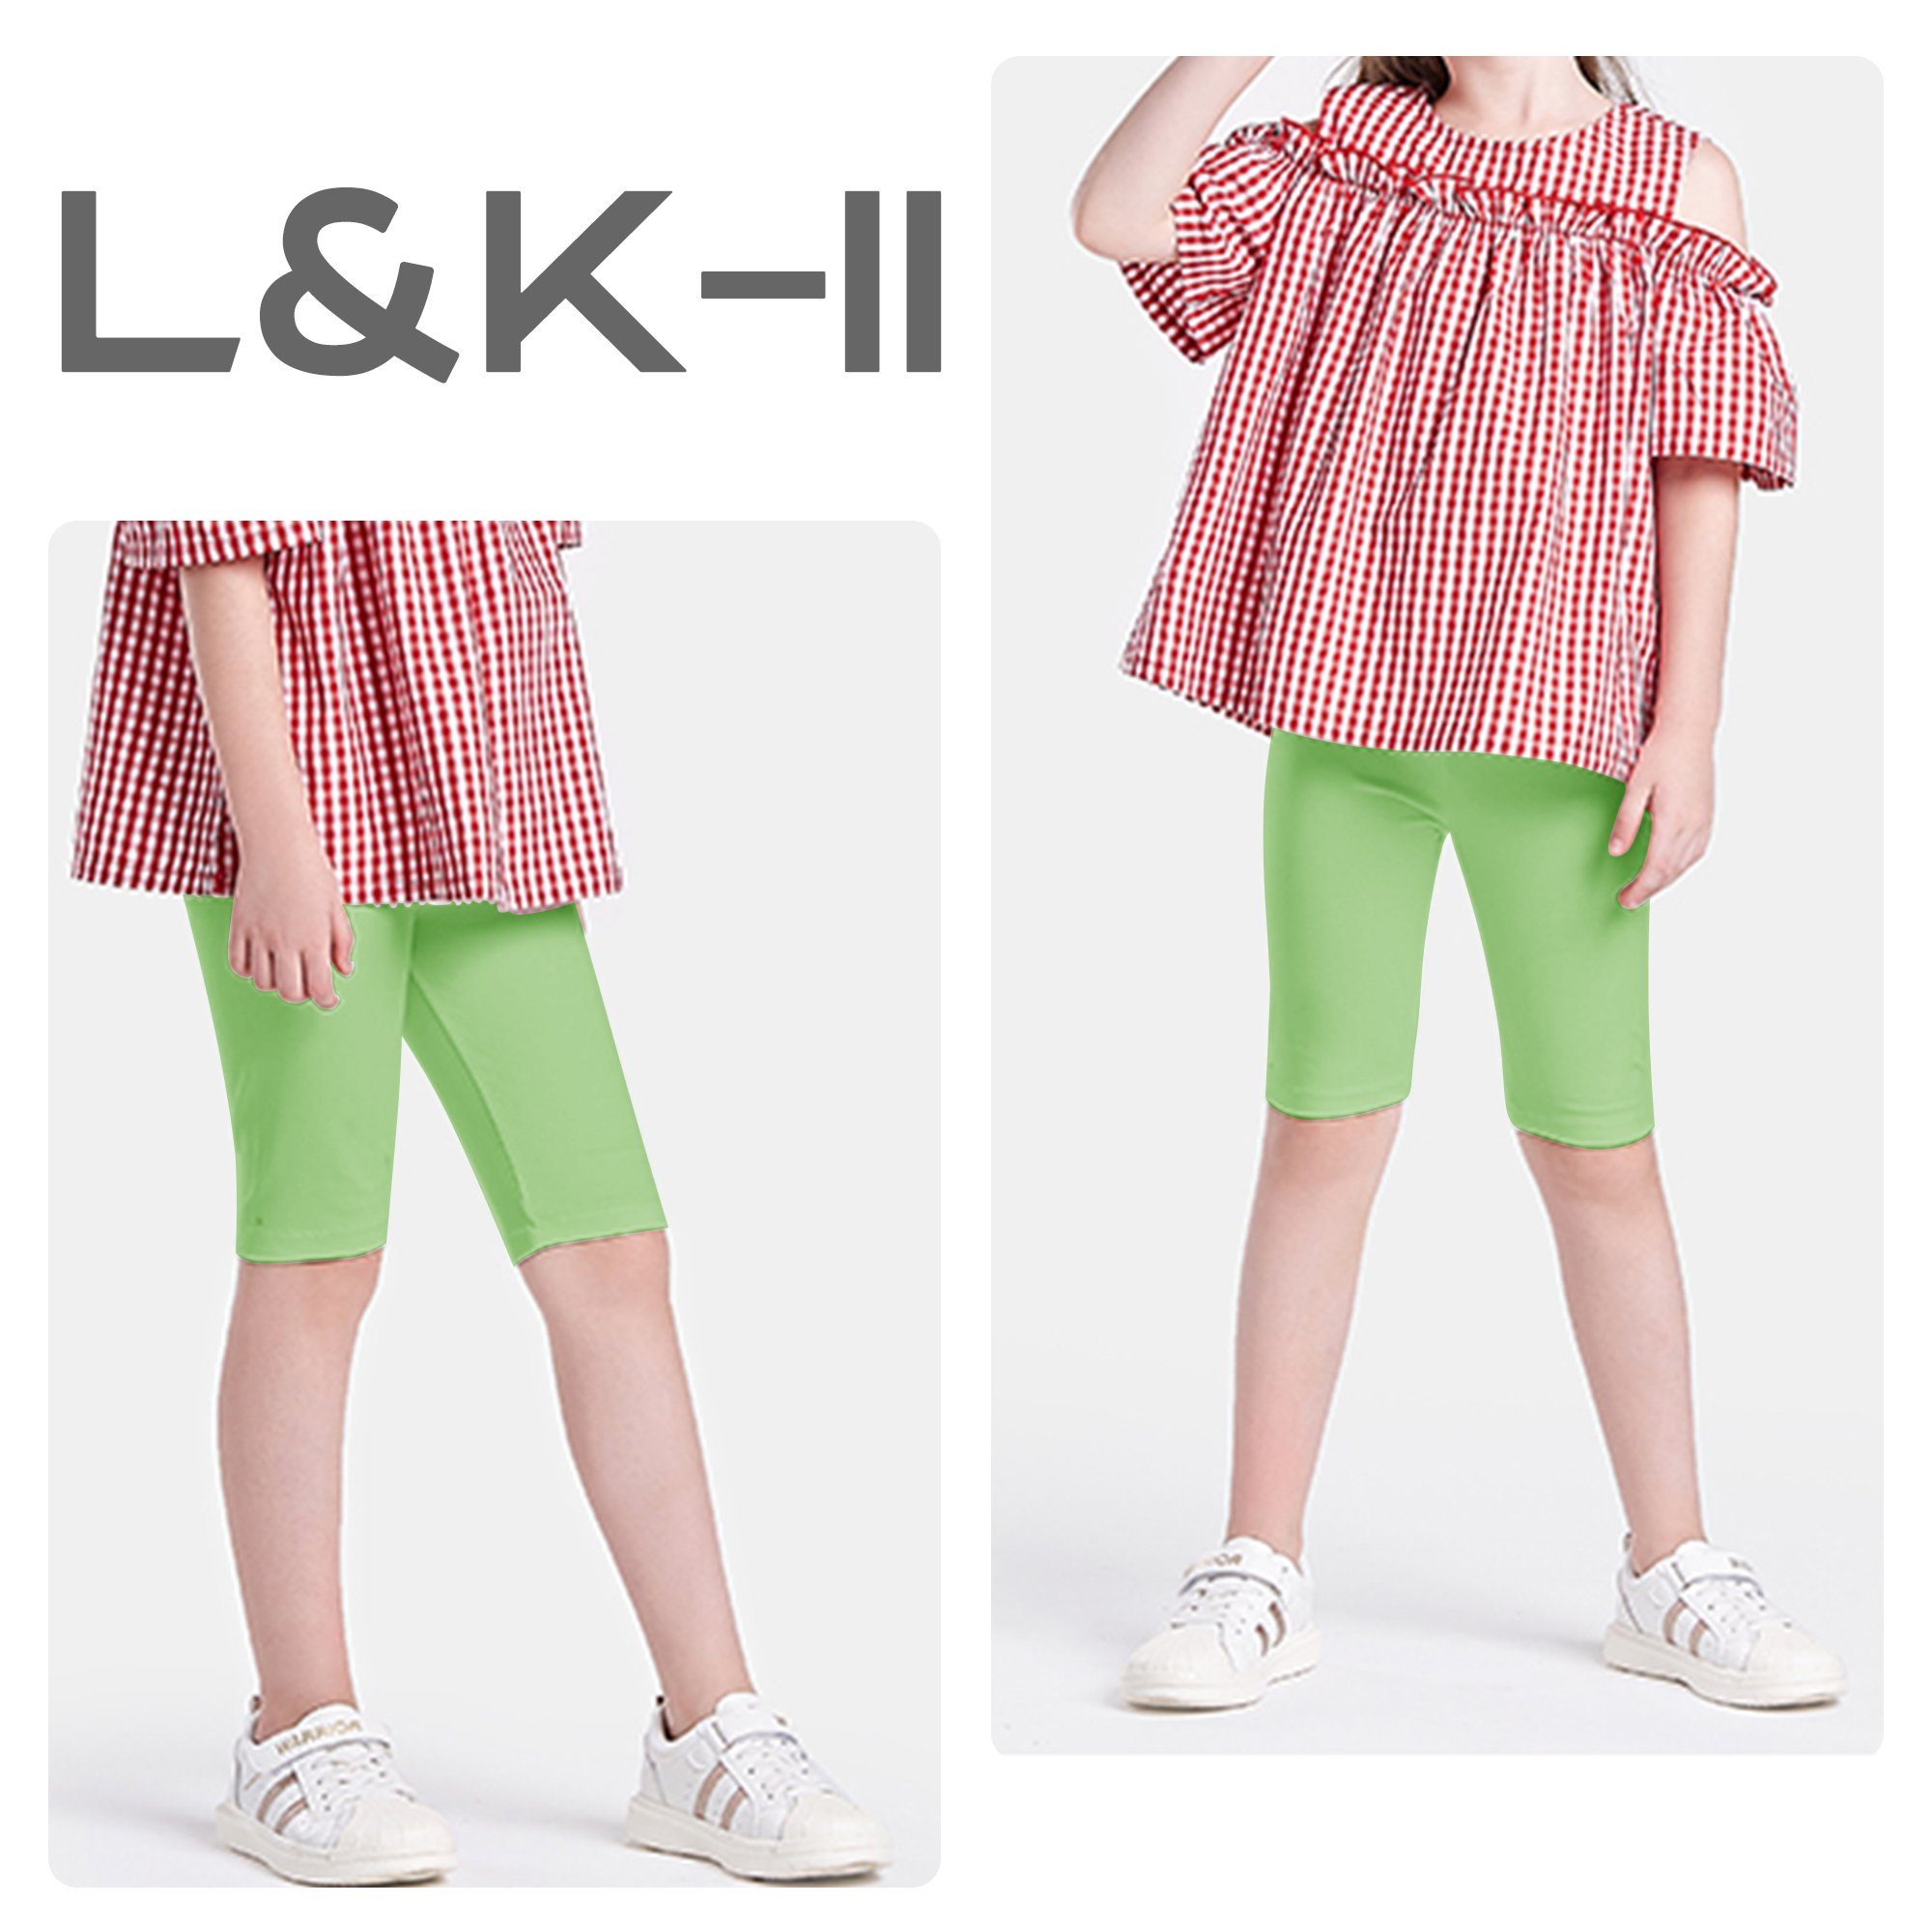 Leggings Grün Mädchen Radlerhose (1er-Pack) Radlerhose Baumwolle L&K-II 4532 Kurz aus